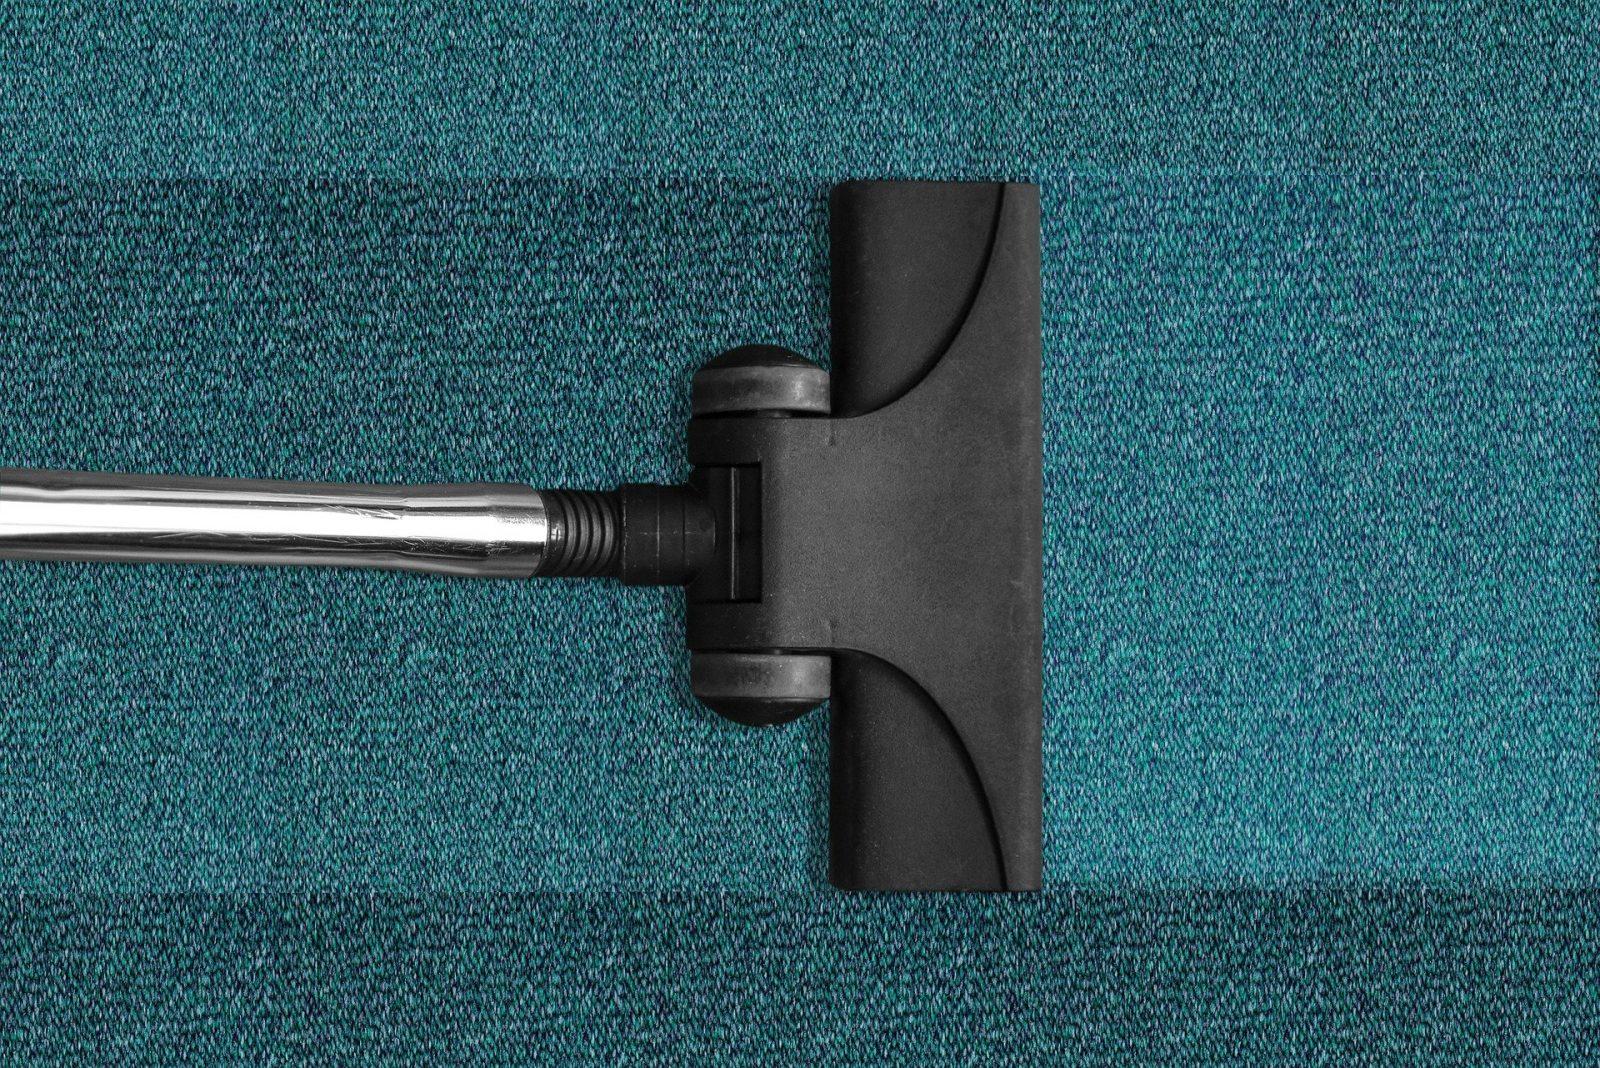 Vacuum cleaner cleaning a dark green carpet